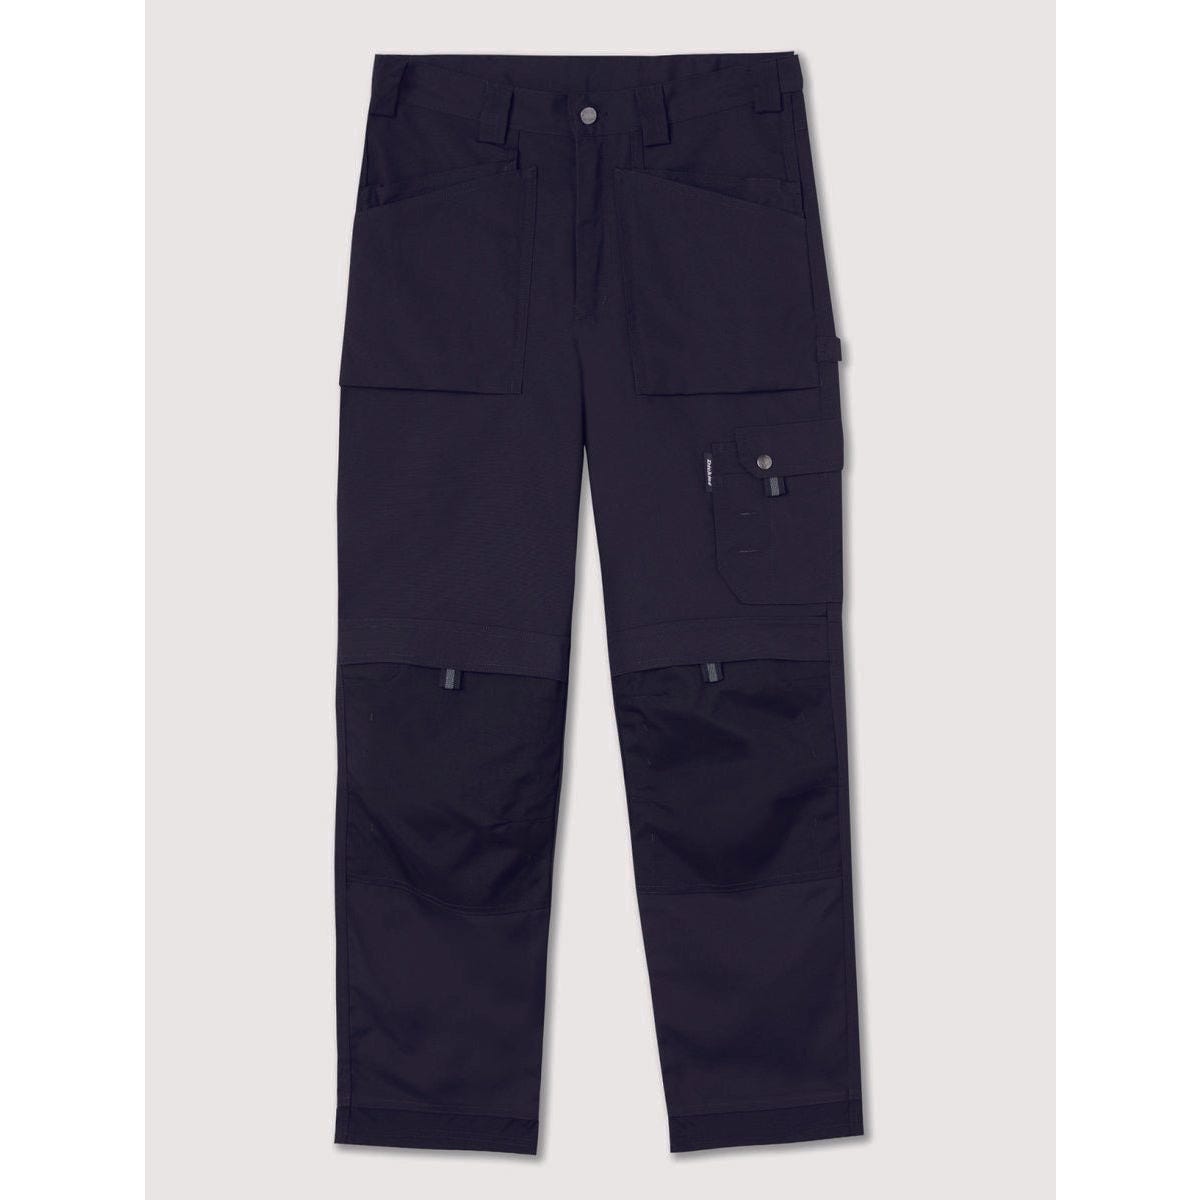 Pantalon Eisenhower multi-poches Bleu marine - Dickies - Taille 42 6